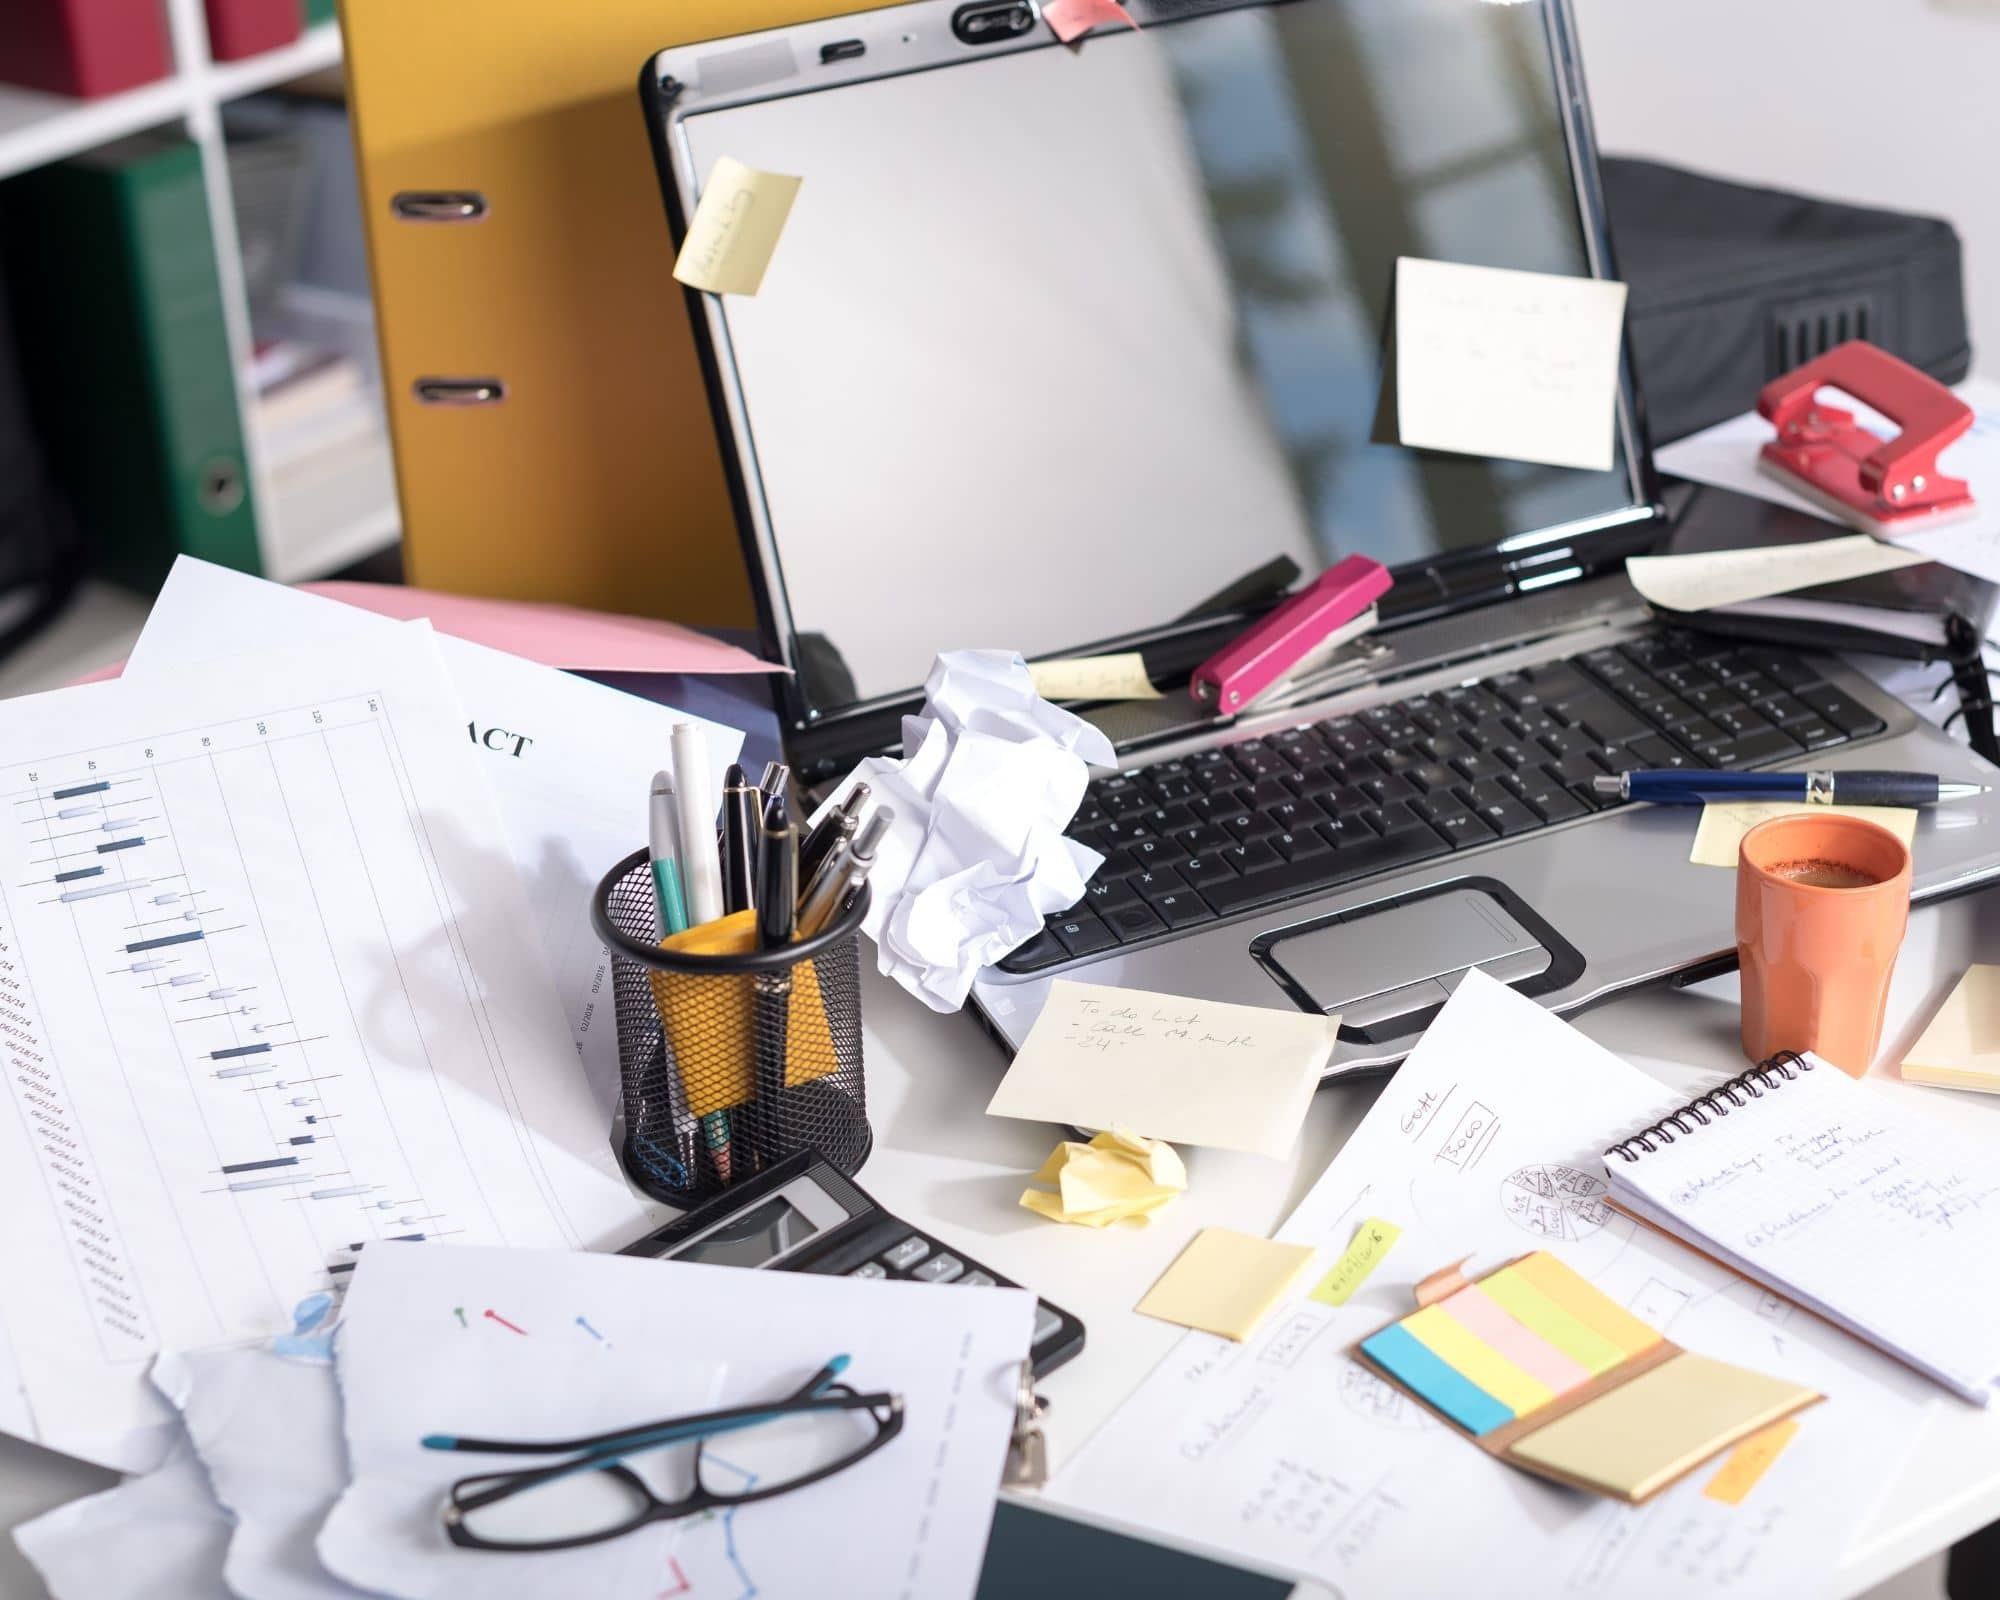 Home office organization - messy desk